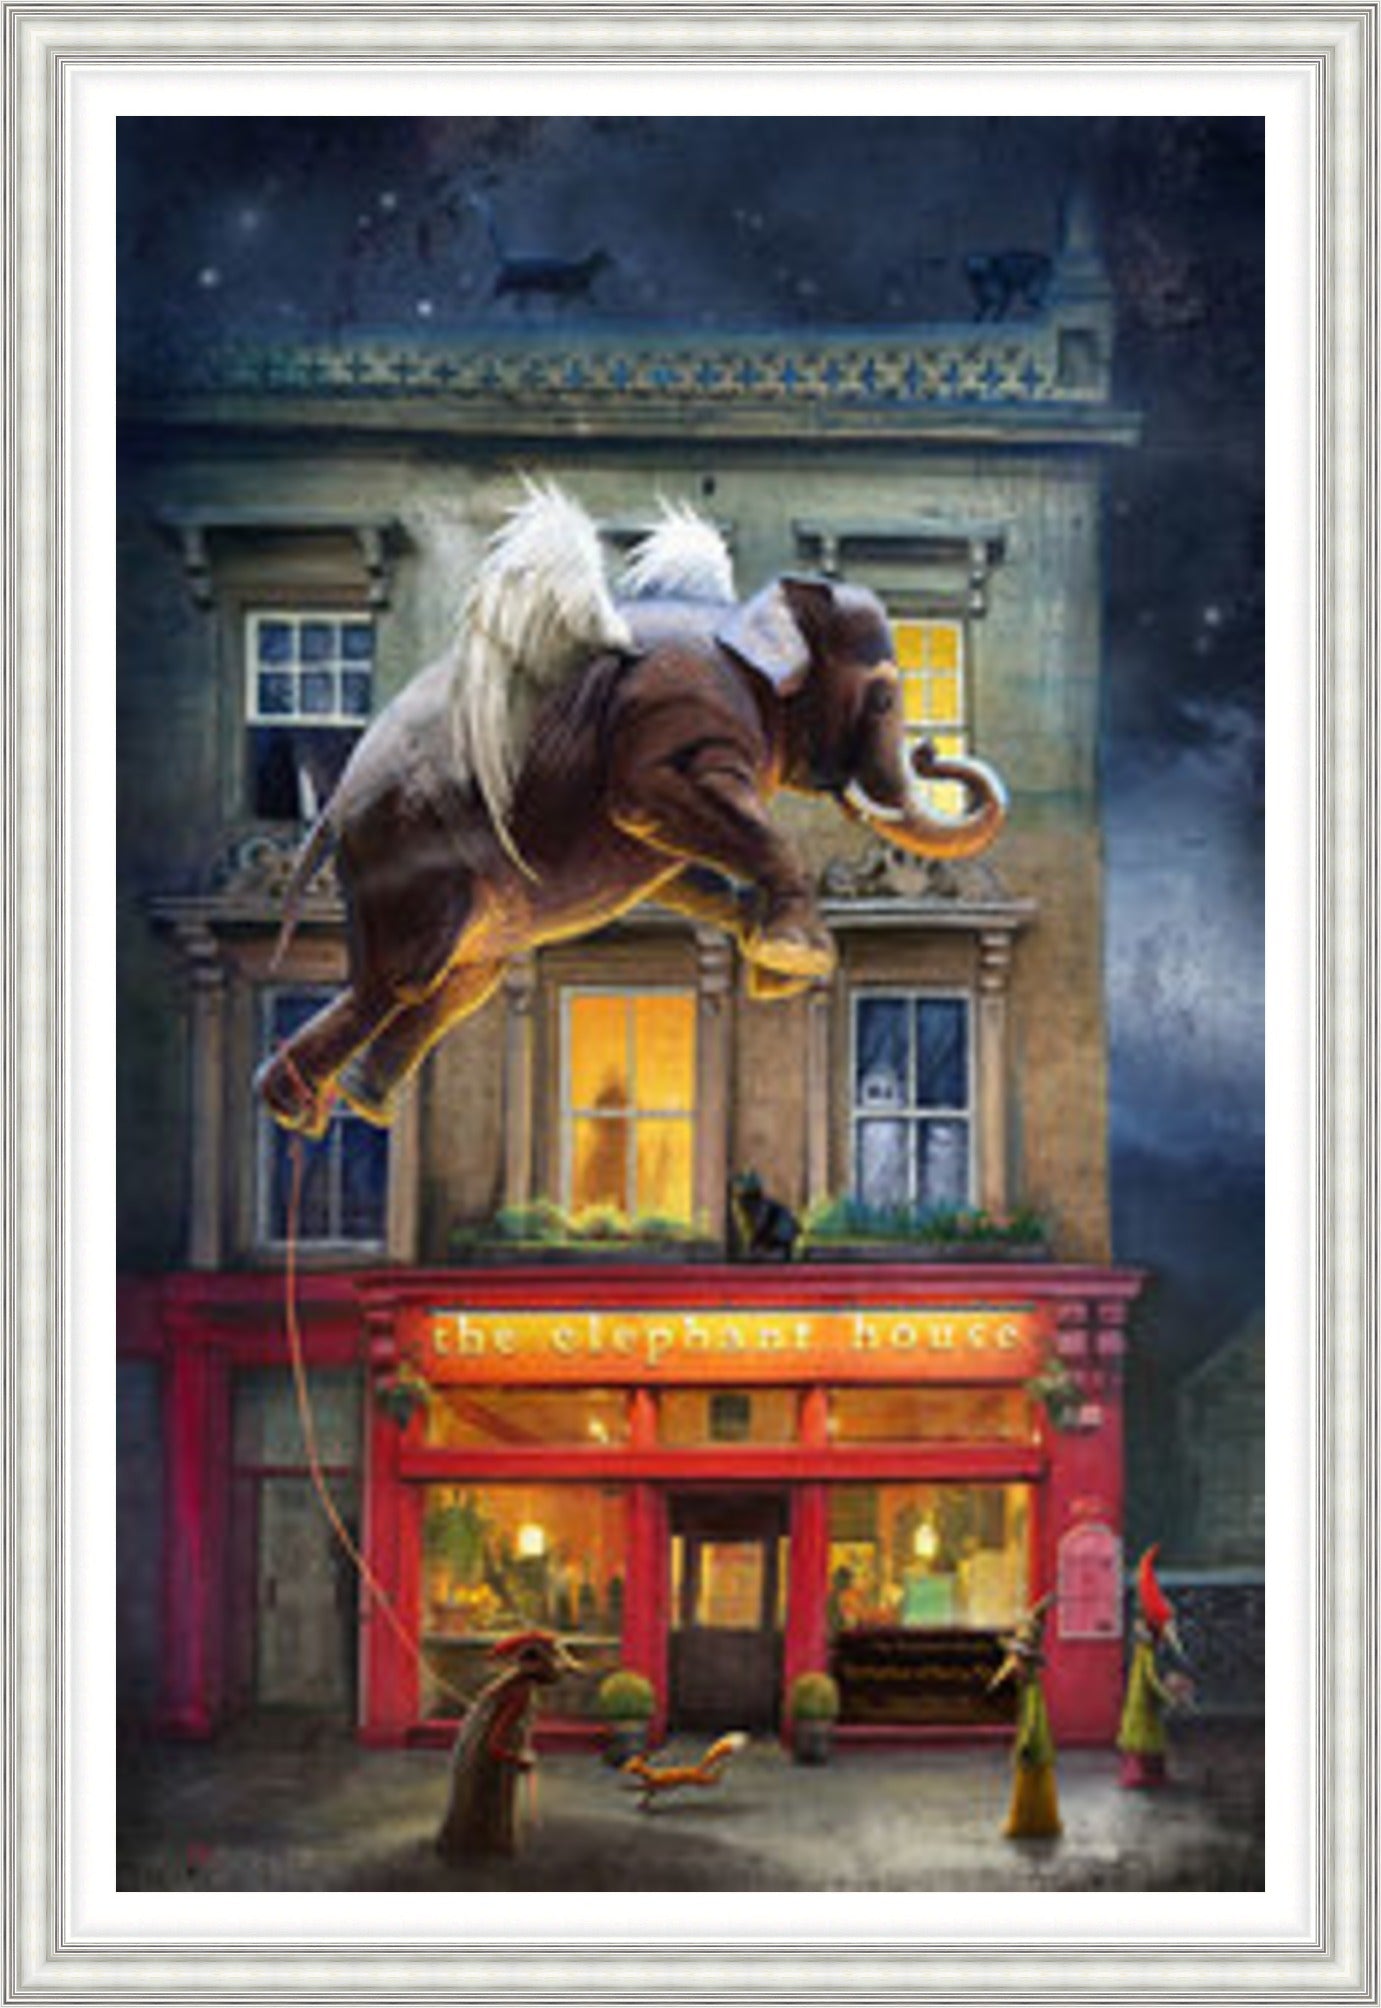 The Elephant House Edinburgh by Matylda Konecka